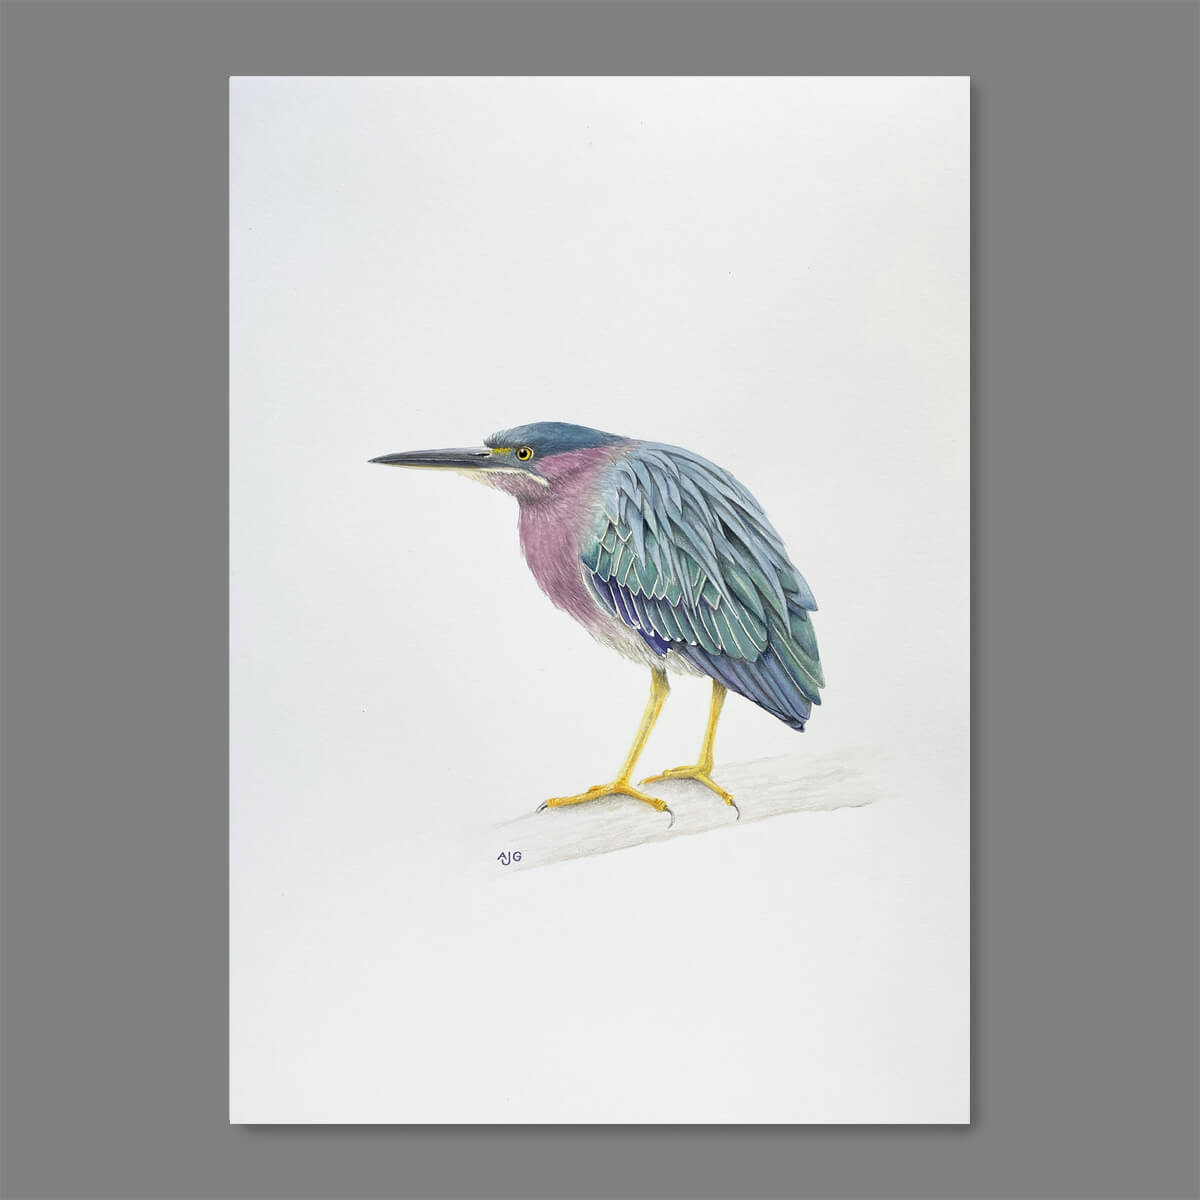 Green Heron gouache painting by bird artist Amanda Gosse